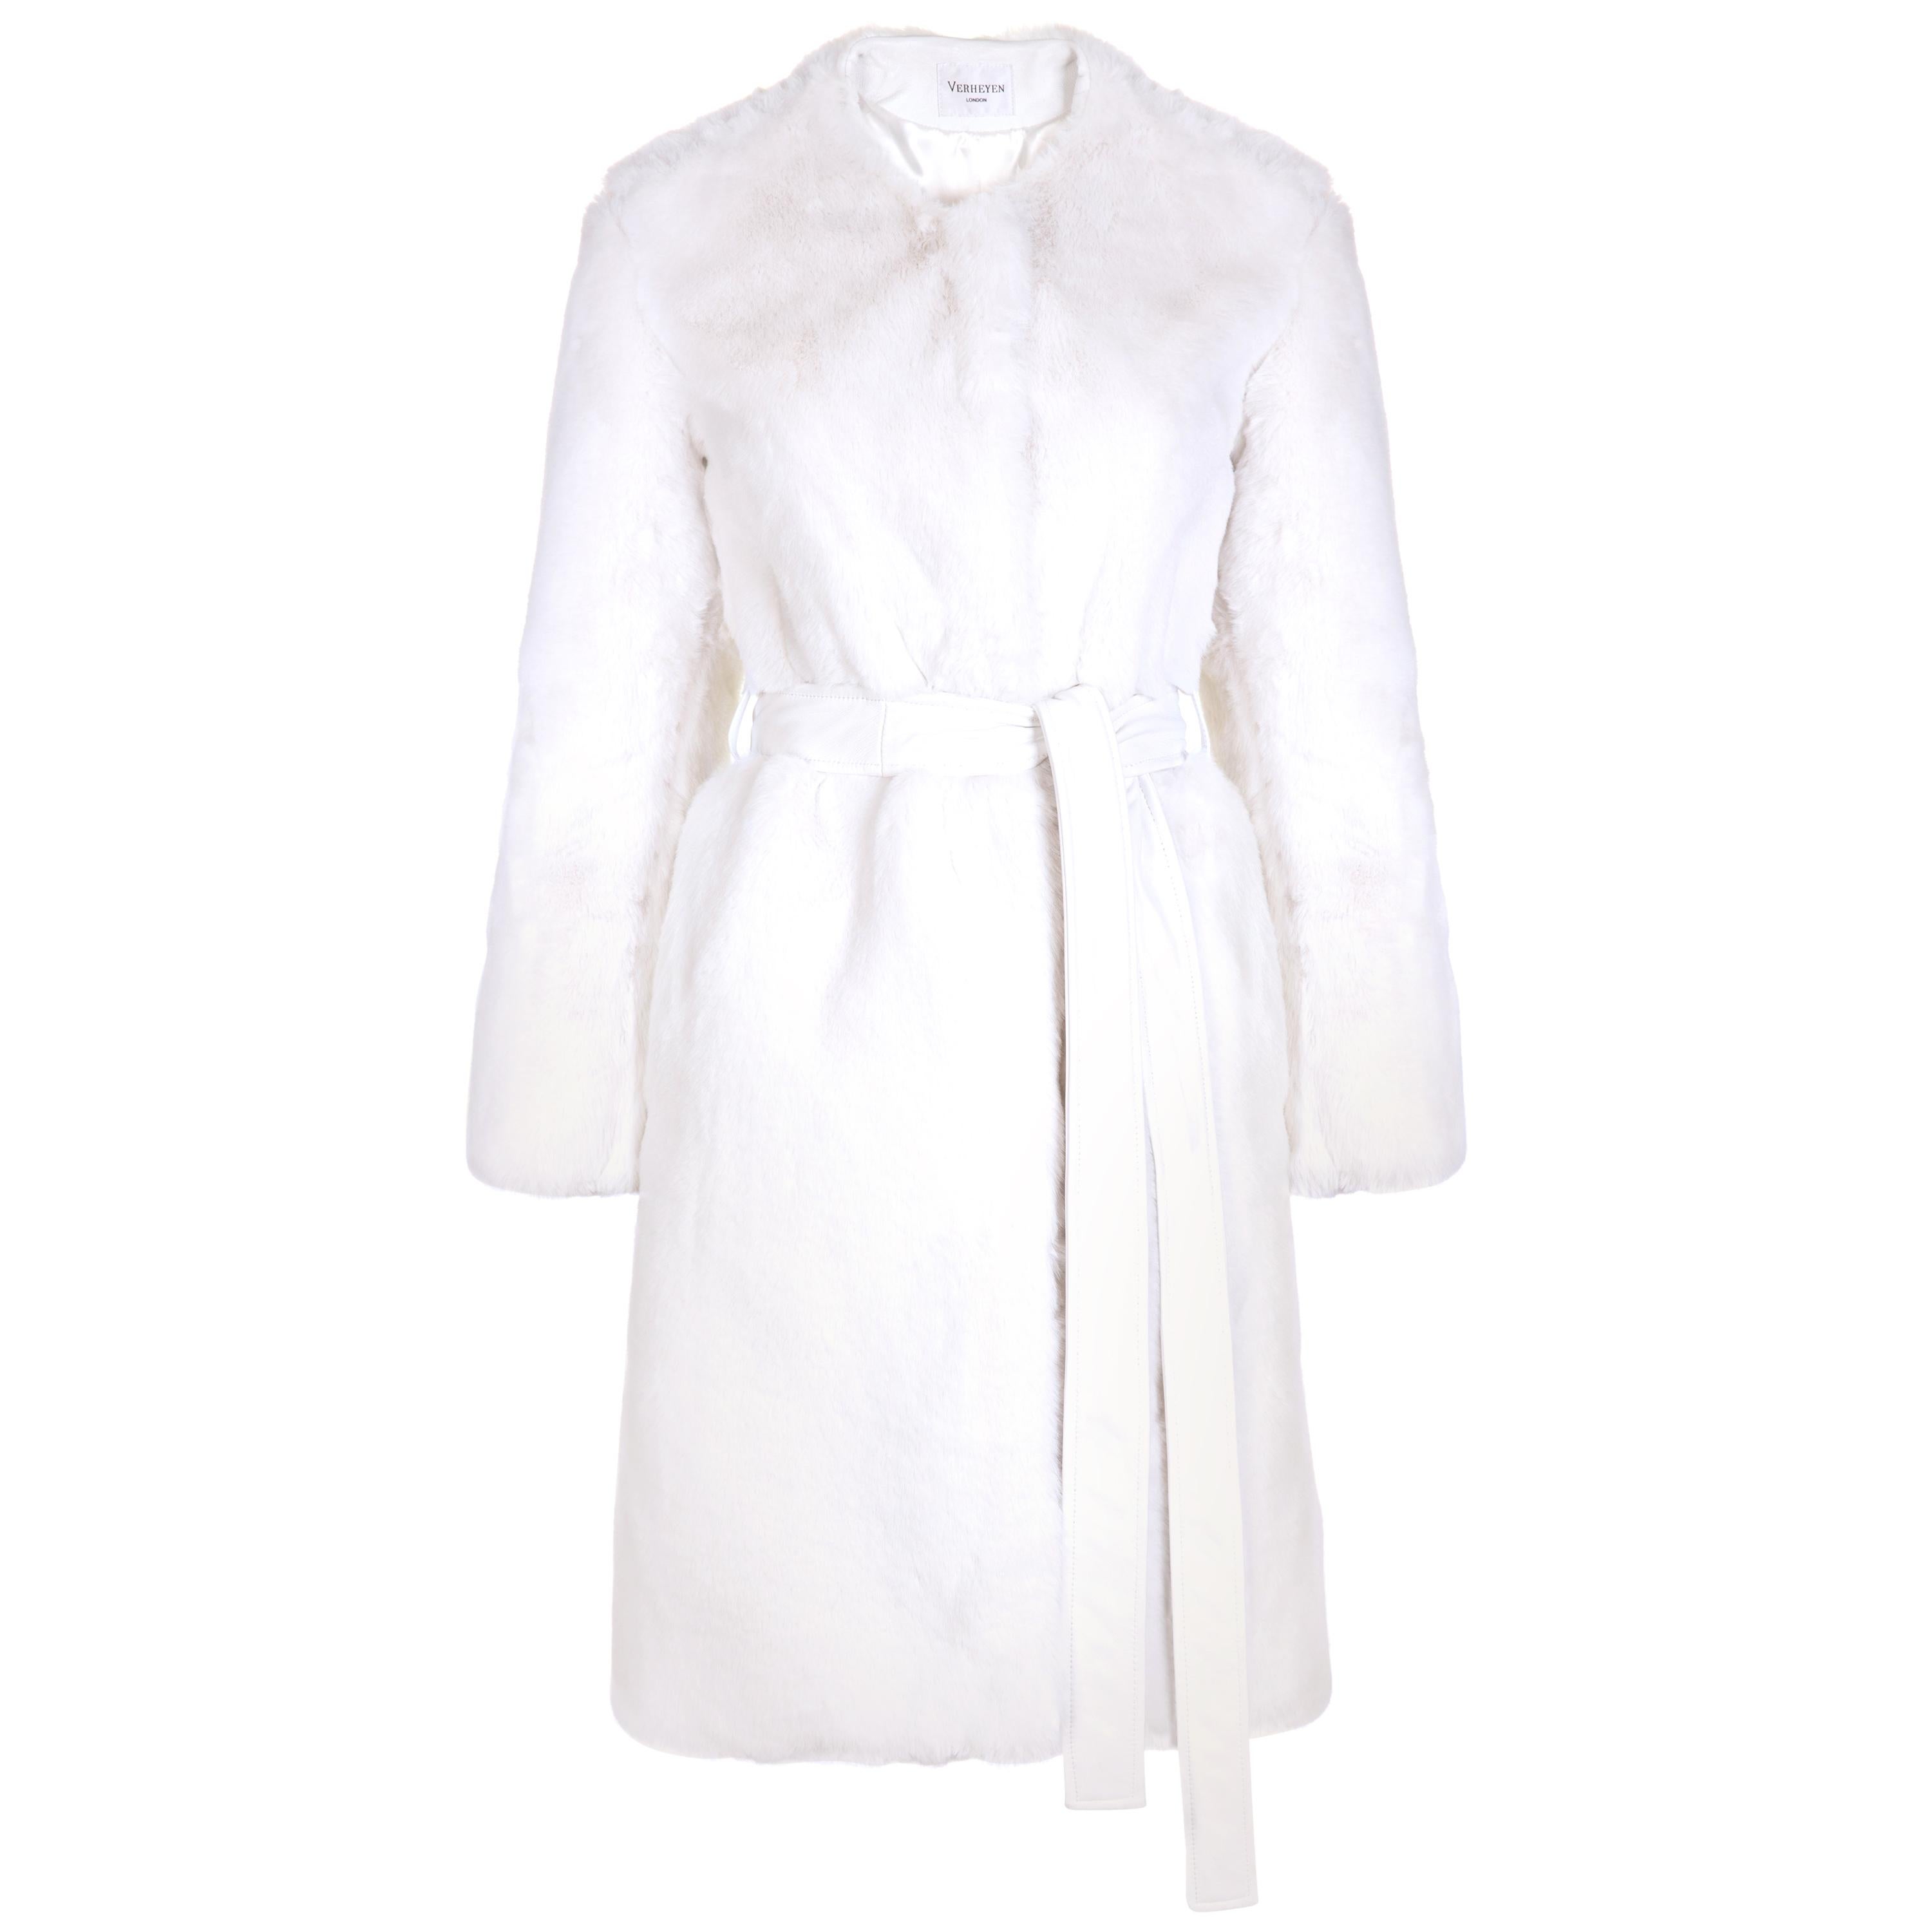 Verheyen London Serena  Collarless Faux Fur Coat in White - Size uk 8 For Sale